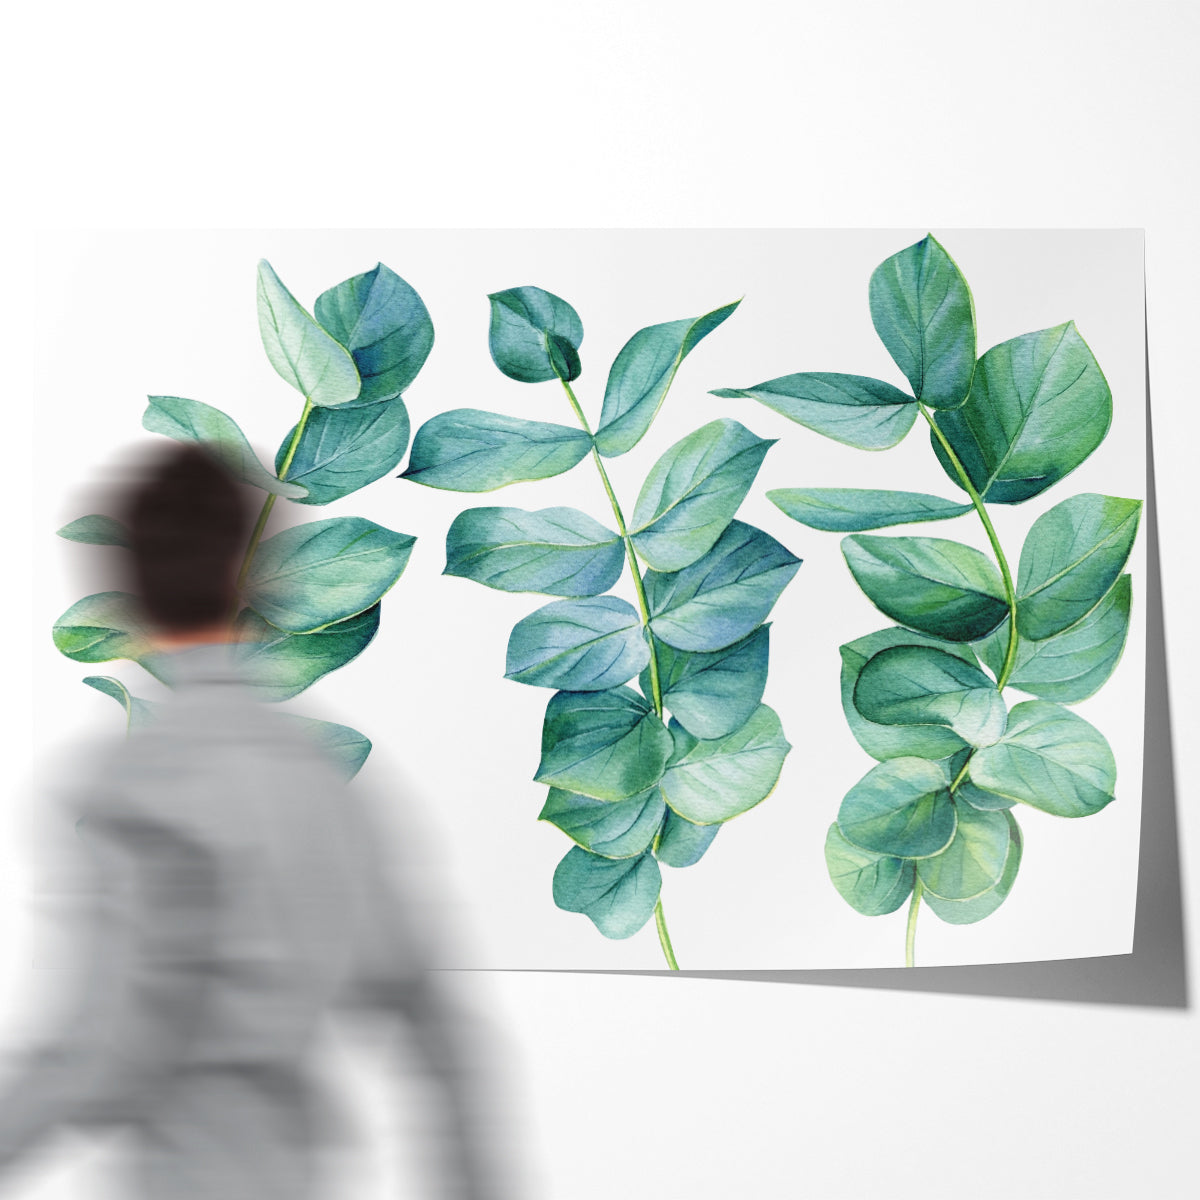 Eucalyptus Branches Minimalist Poster Art Prints-Horizontal Posters NOT FRAMED-CetArt-10″x8″ inches-CetArt